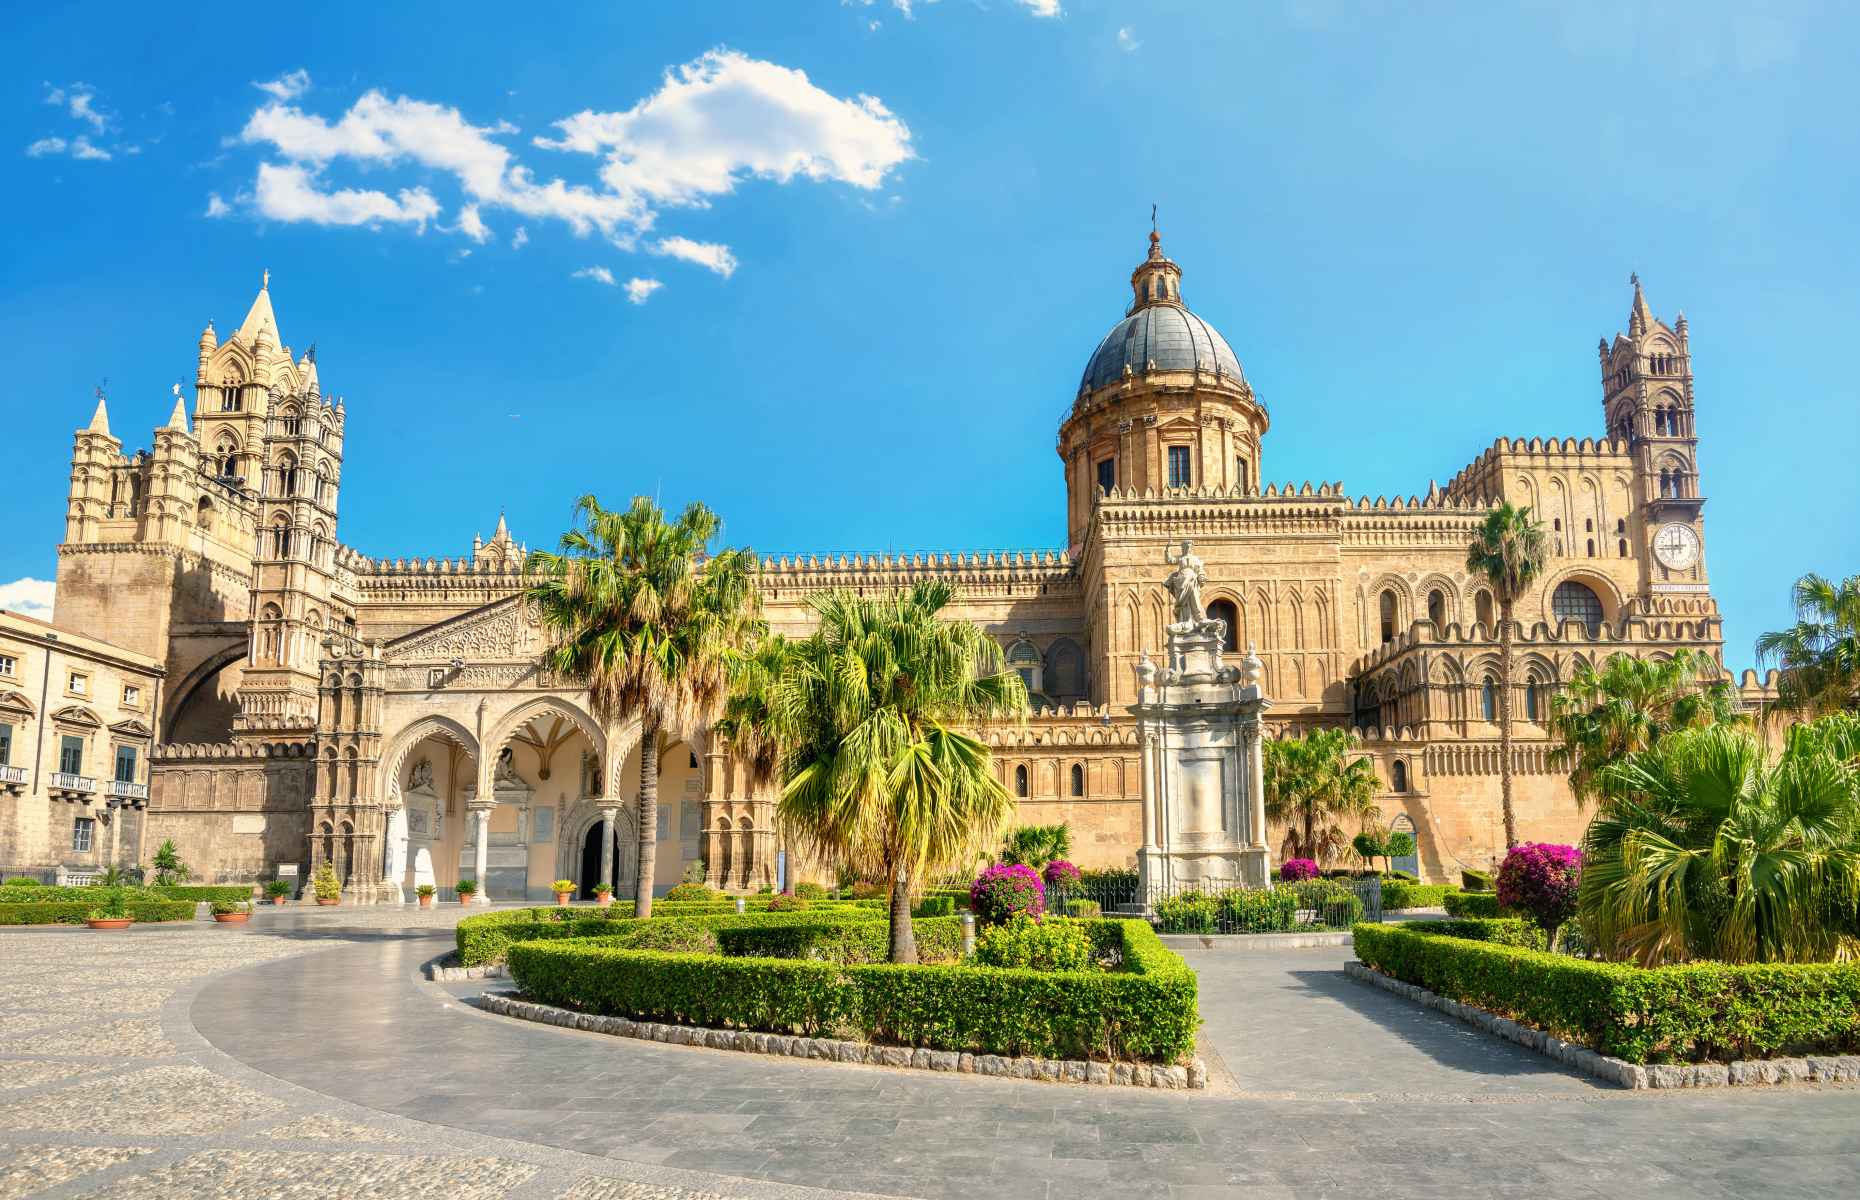 Palermo Cathedral (Image: Shutterstock/Valery Bareta)